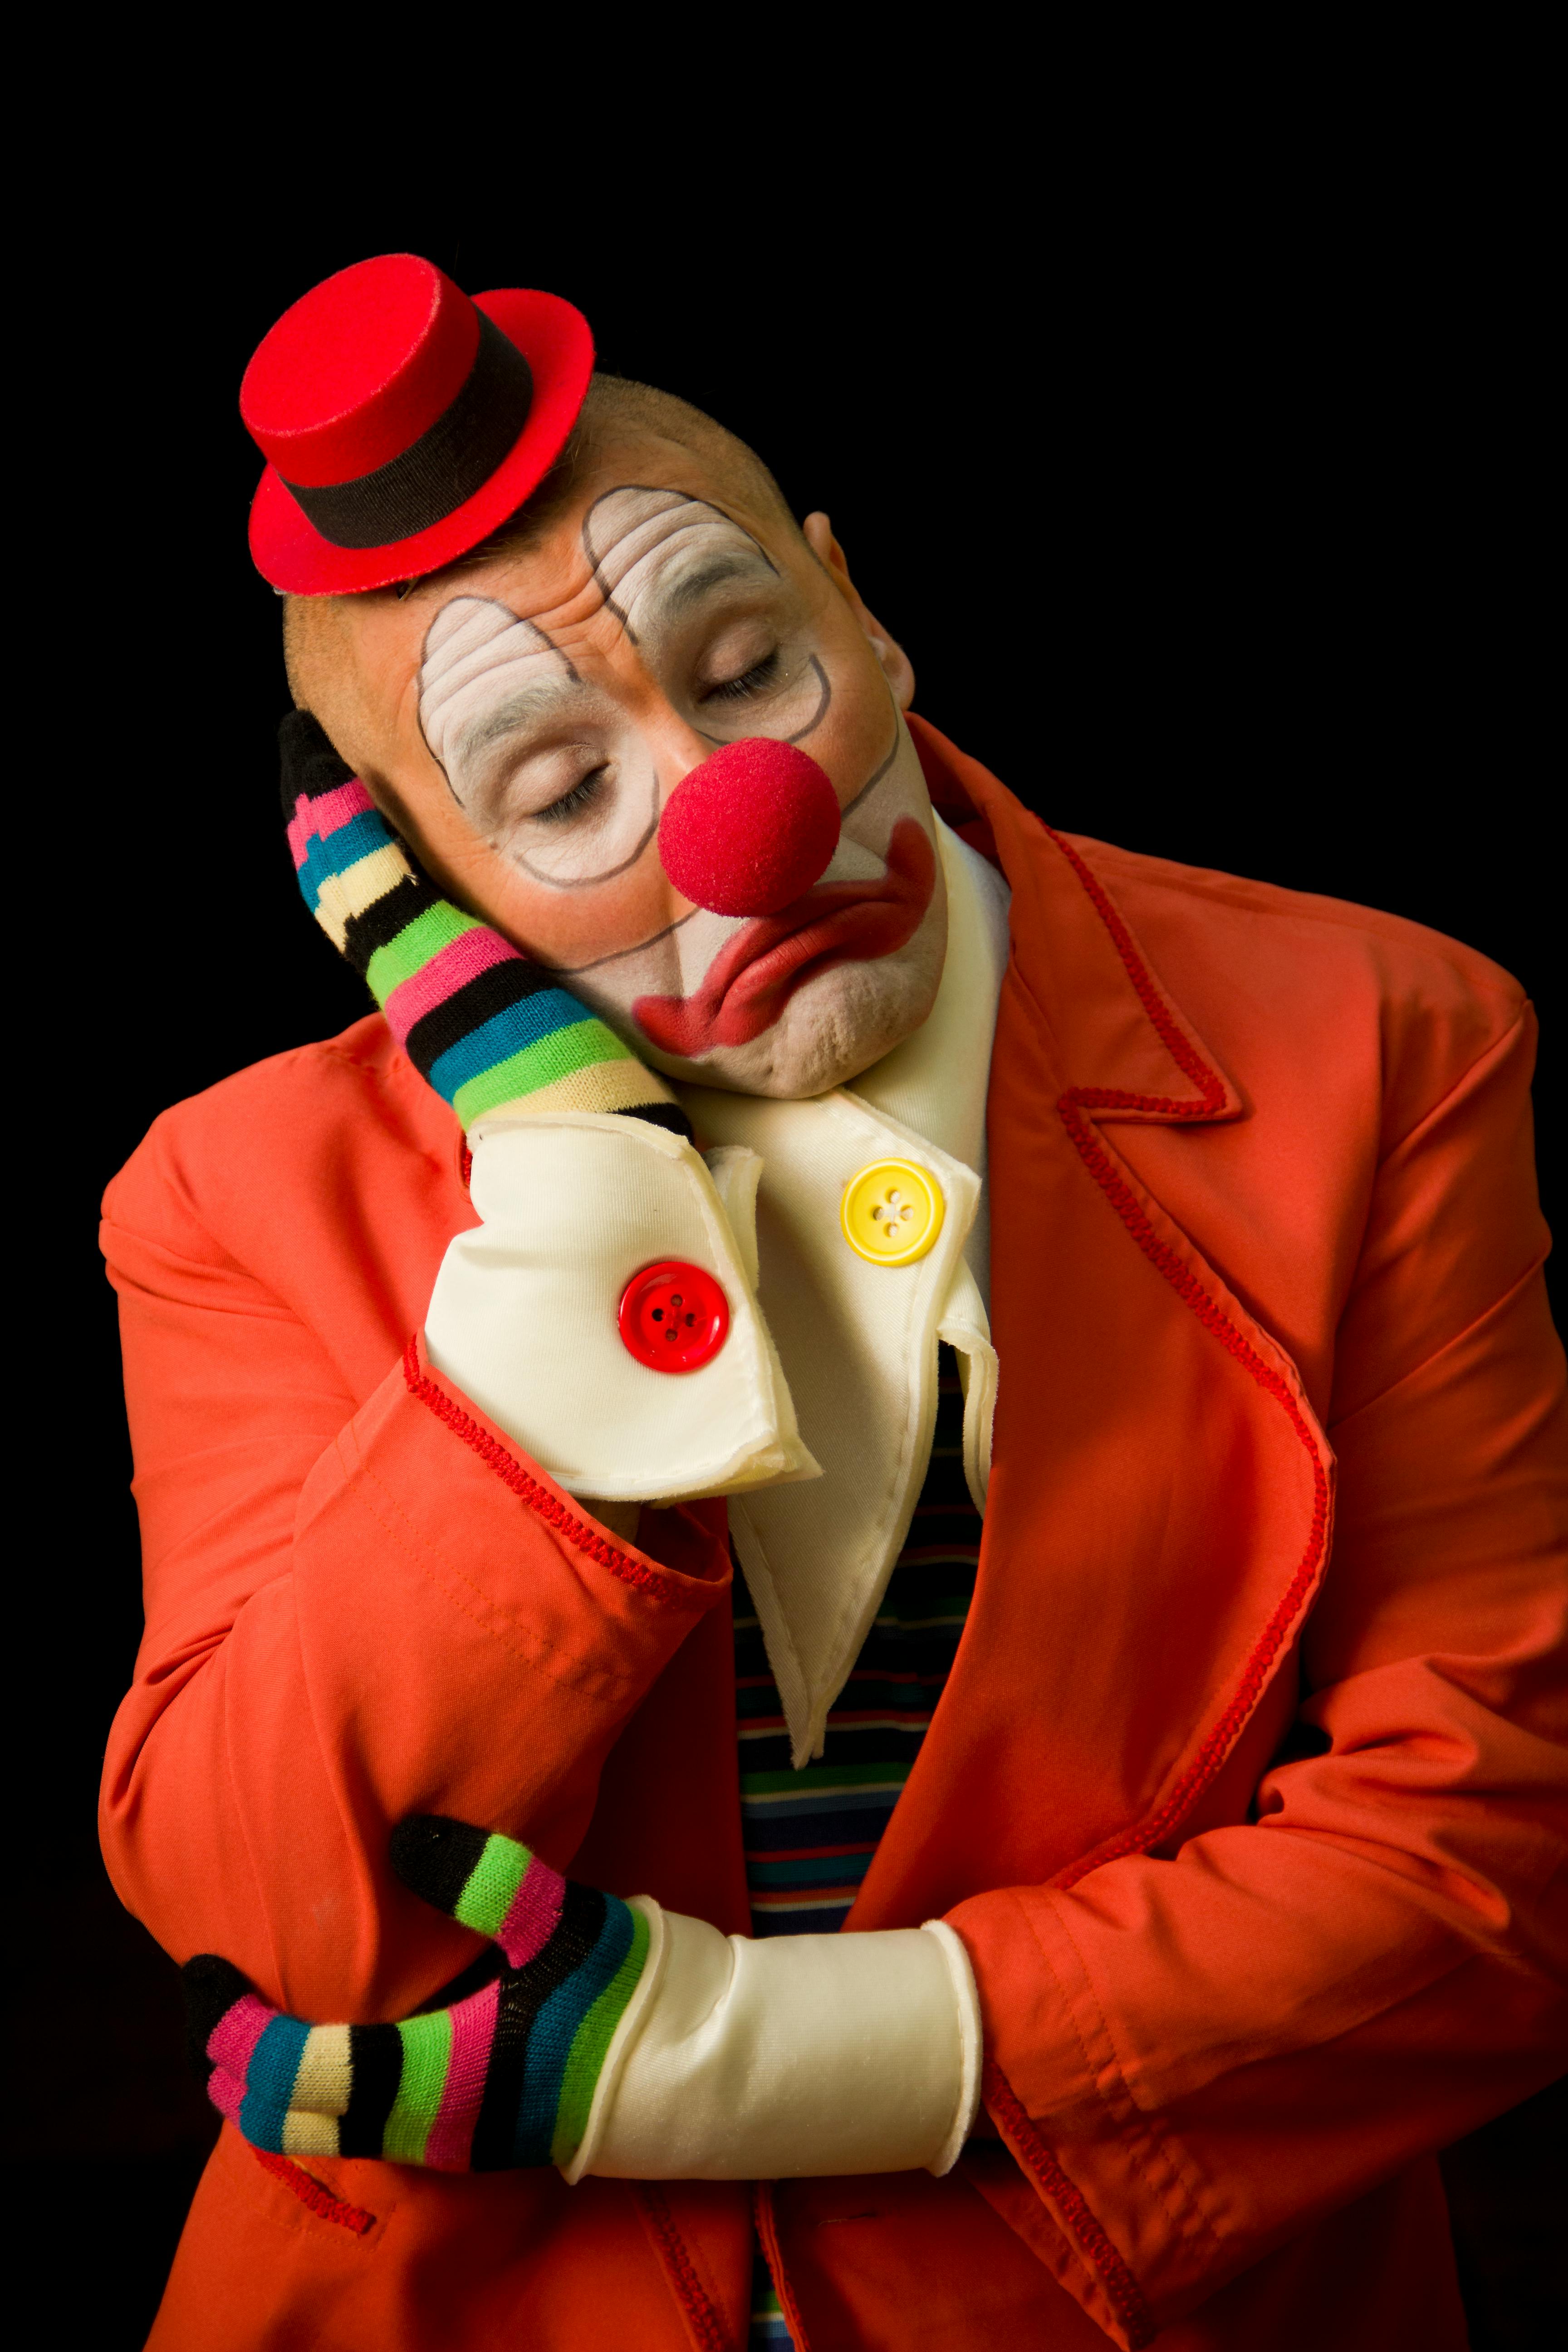 Sad Clown Photos, Download The BEST Free Sad Clown Stock Photos & HD Images